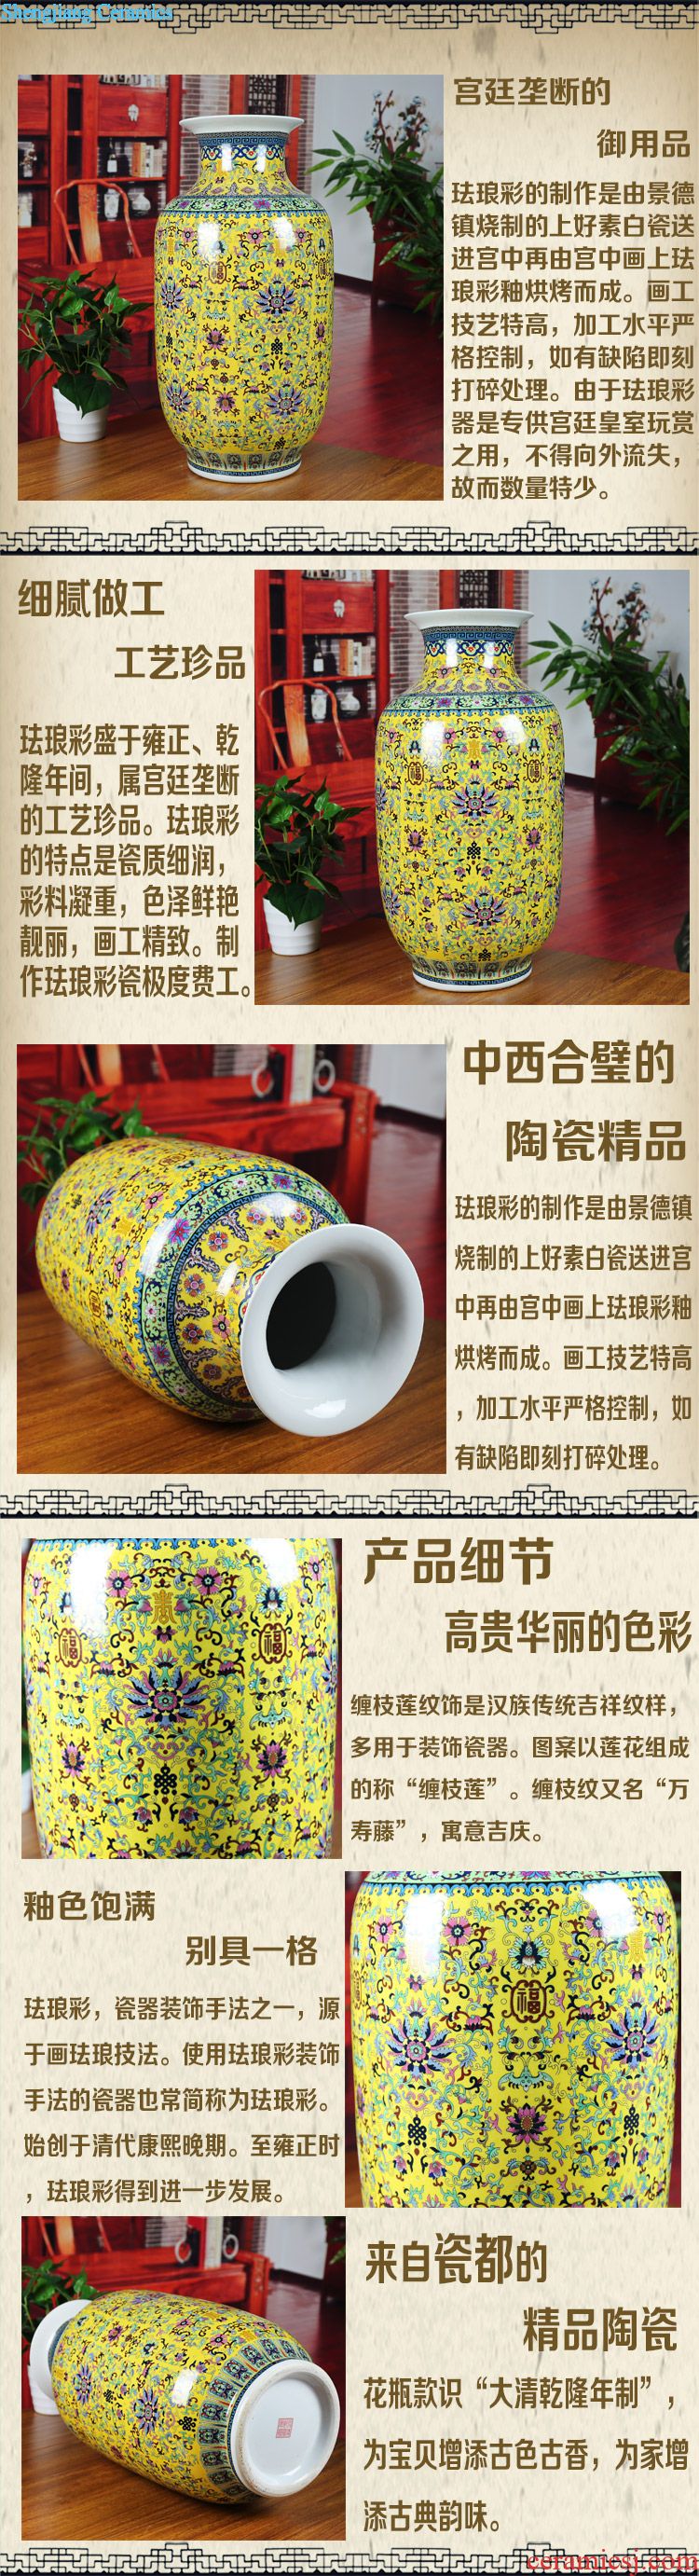 Jingdezhen ceramics colored enamel vase modern home sitting room adornment branch lotus company landing furnishing articles